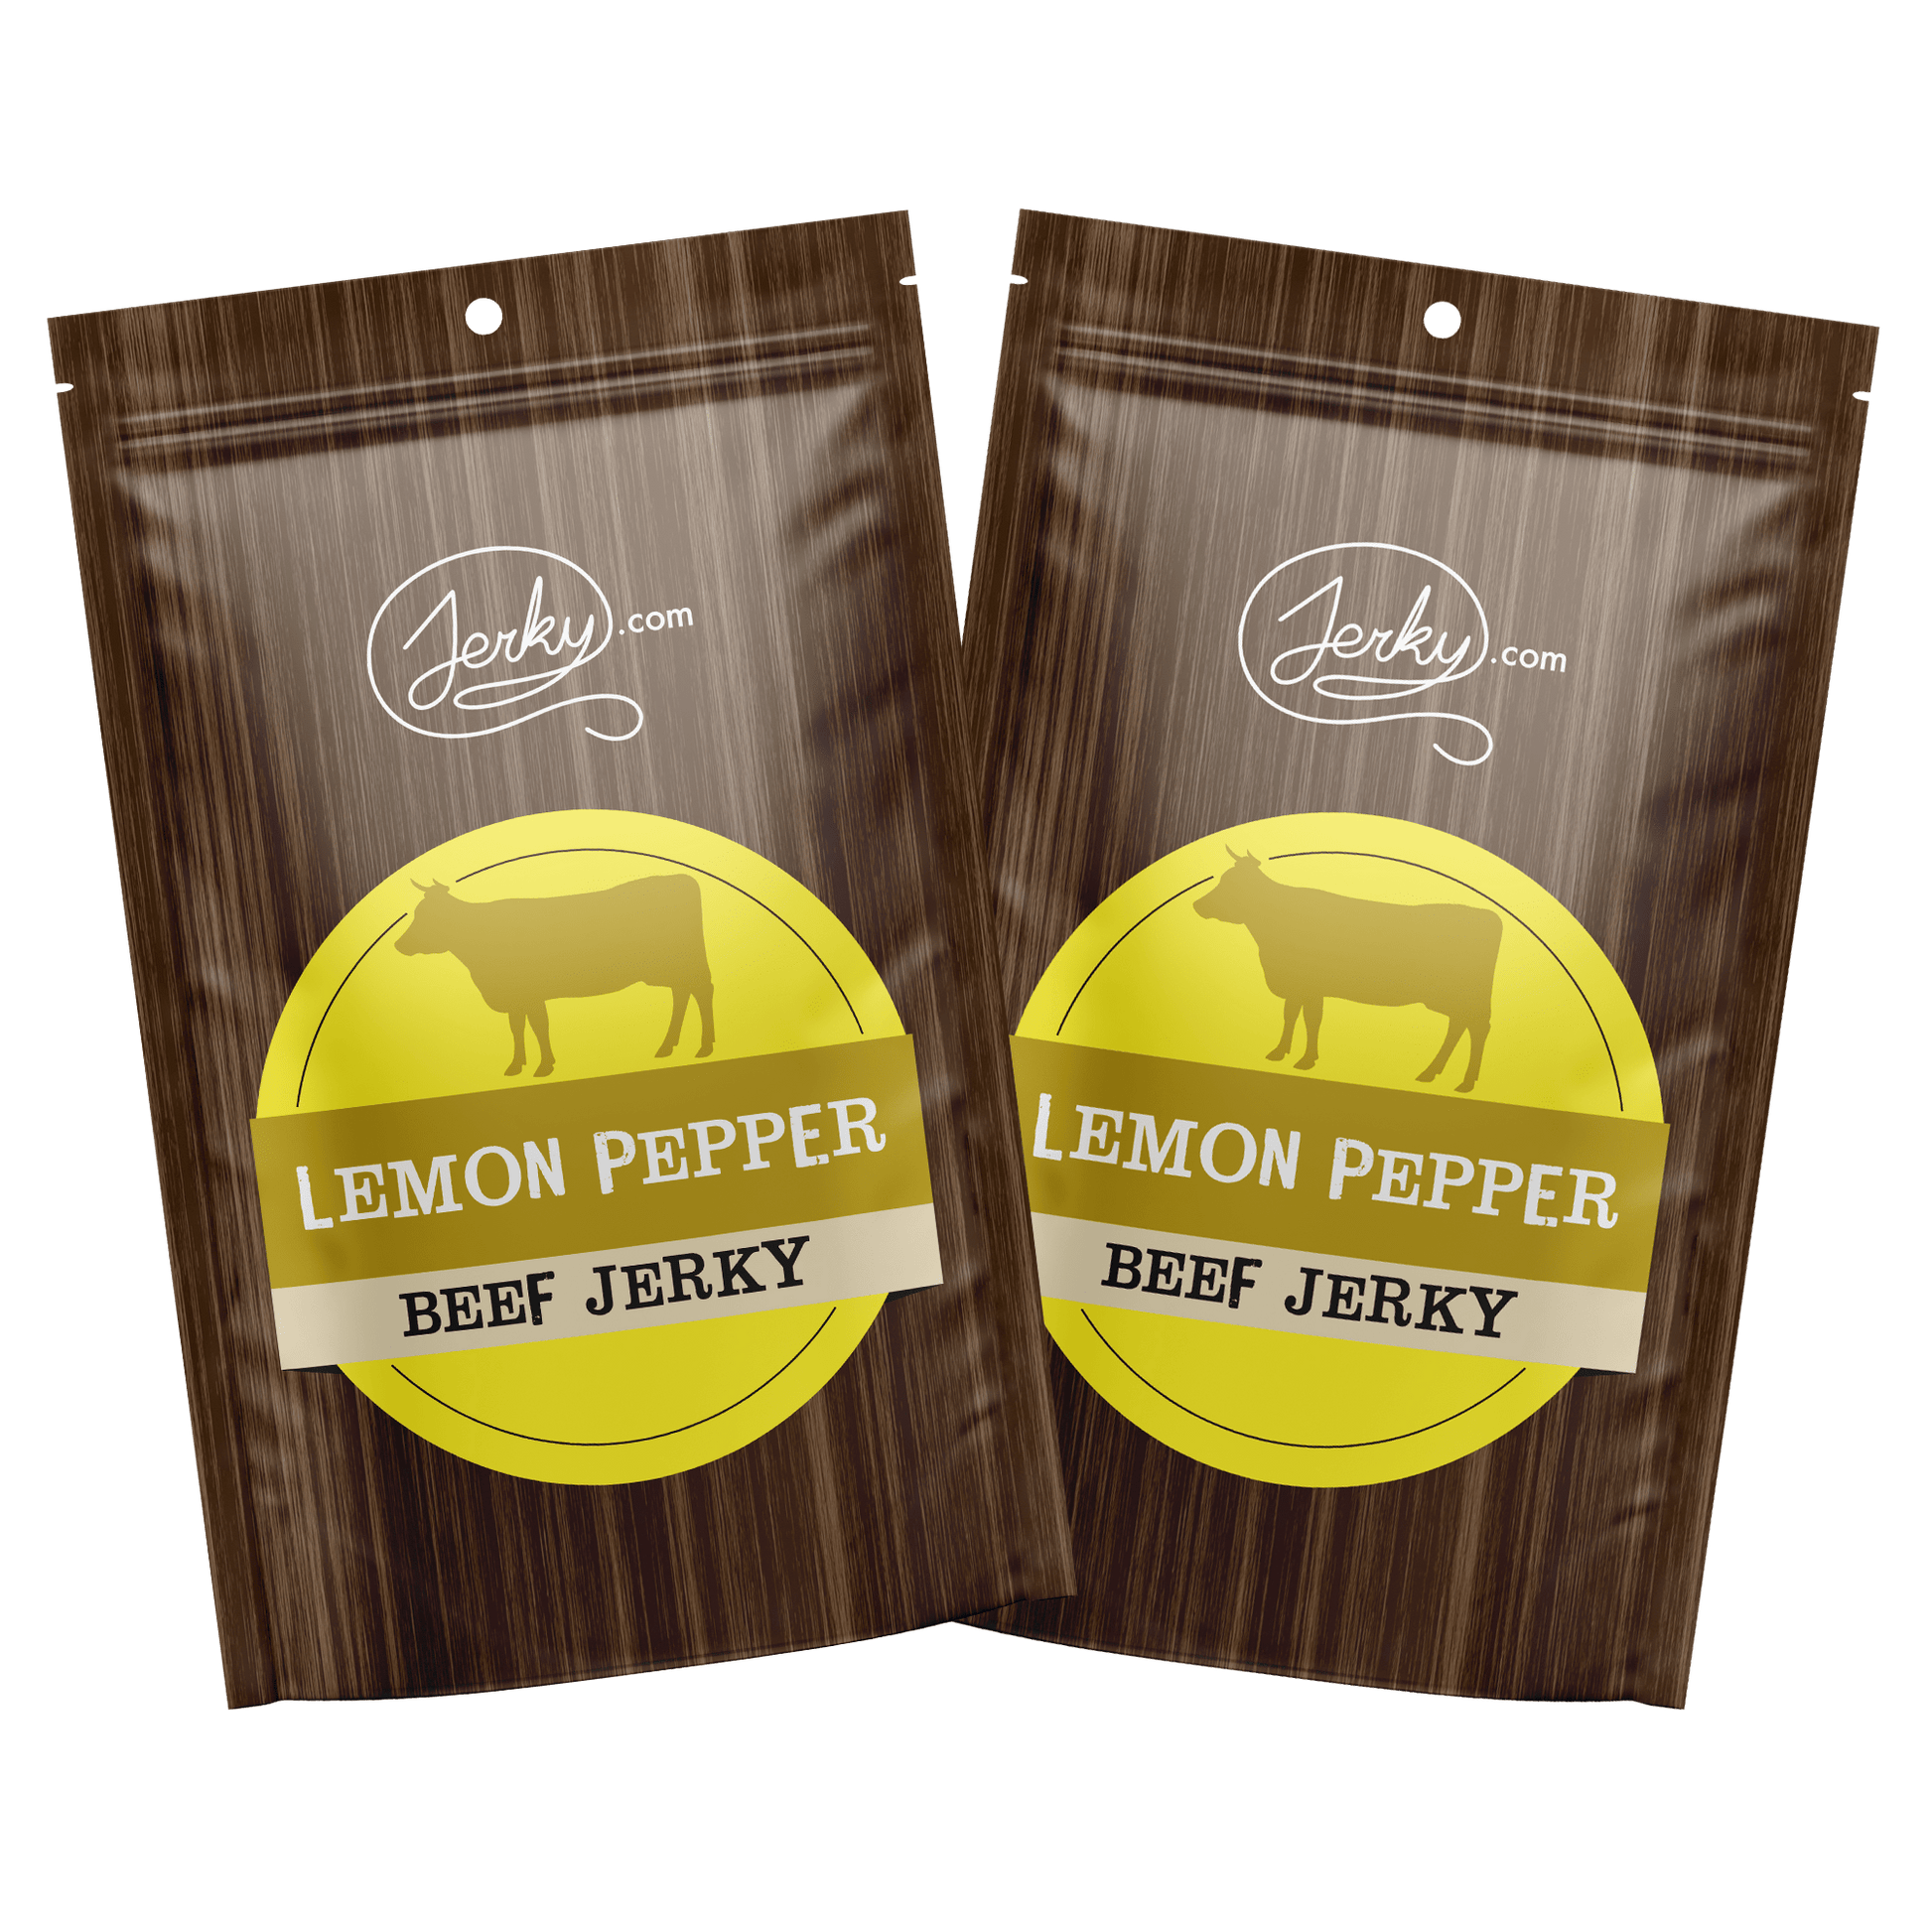 Lemon Pepper Beef Jerky 2-Pack by Jerky.com